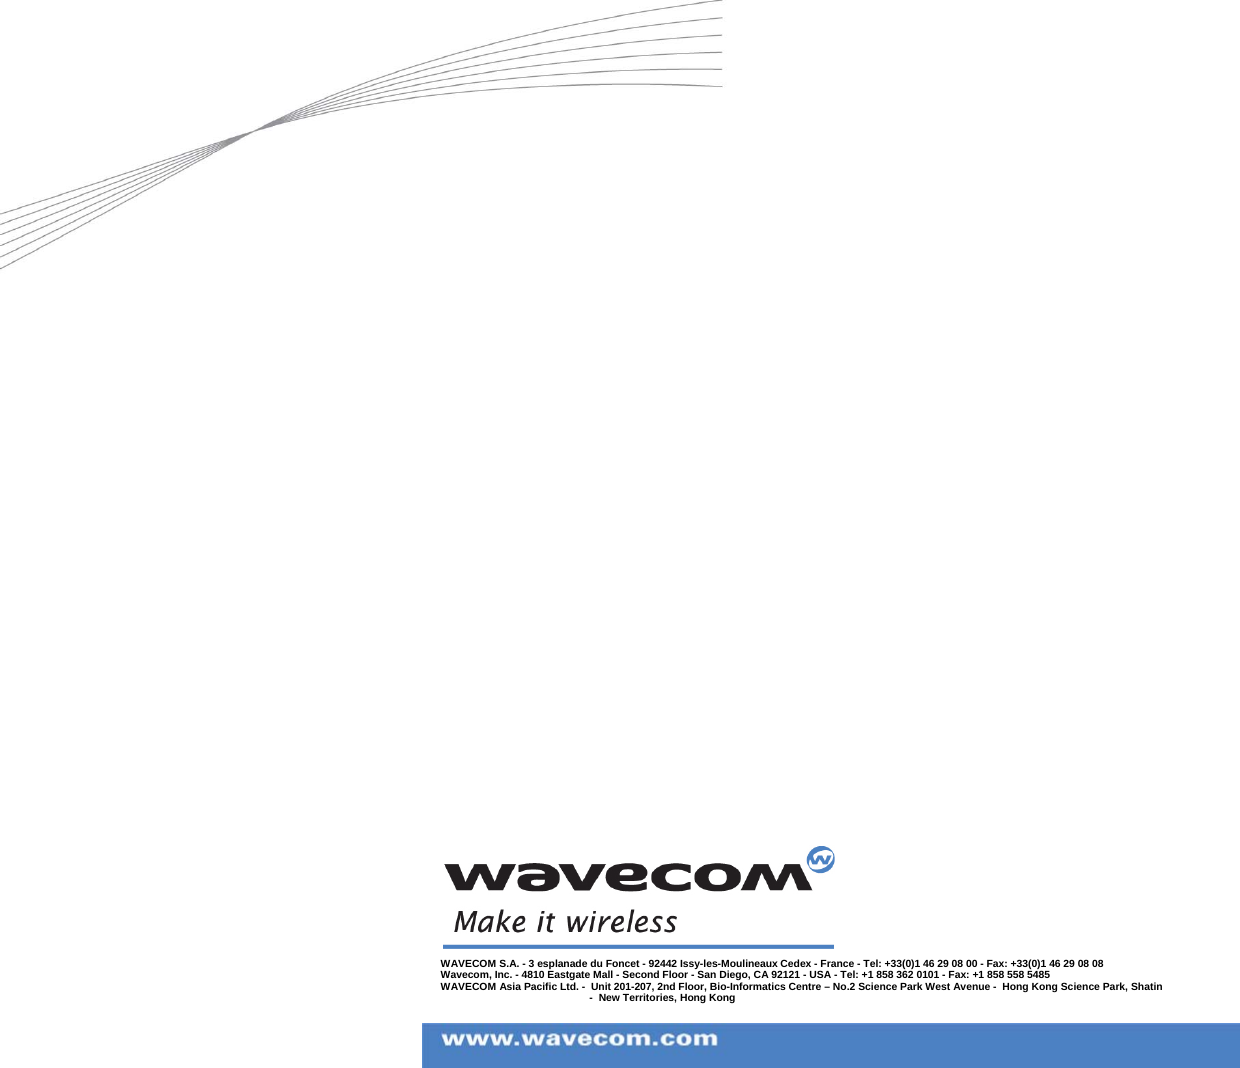 WAVECOM S.A. - 3 esplanade du Foncet - 92442 Issy-les-Moulineaux Cedex - France - Tel: +33(0)1 46 29 08 00 - Fax: +33(0)1 46 29 08 08Wavecom, Inc. - 4810 Eastgate Mall - Second Floor - San Diego, CA 92121 - USA - Tel: +1 858 362 0101 - Fax: +1 858 558 5485WAVECOM Asia Pacific Ltd. - Unit 201-207, 2nd Floor, Bio-Informatics Centre – No.2 Science Park West Avenue - Hong Kong Science Park, Shatin - New Territories, Hong Kong